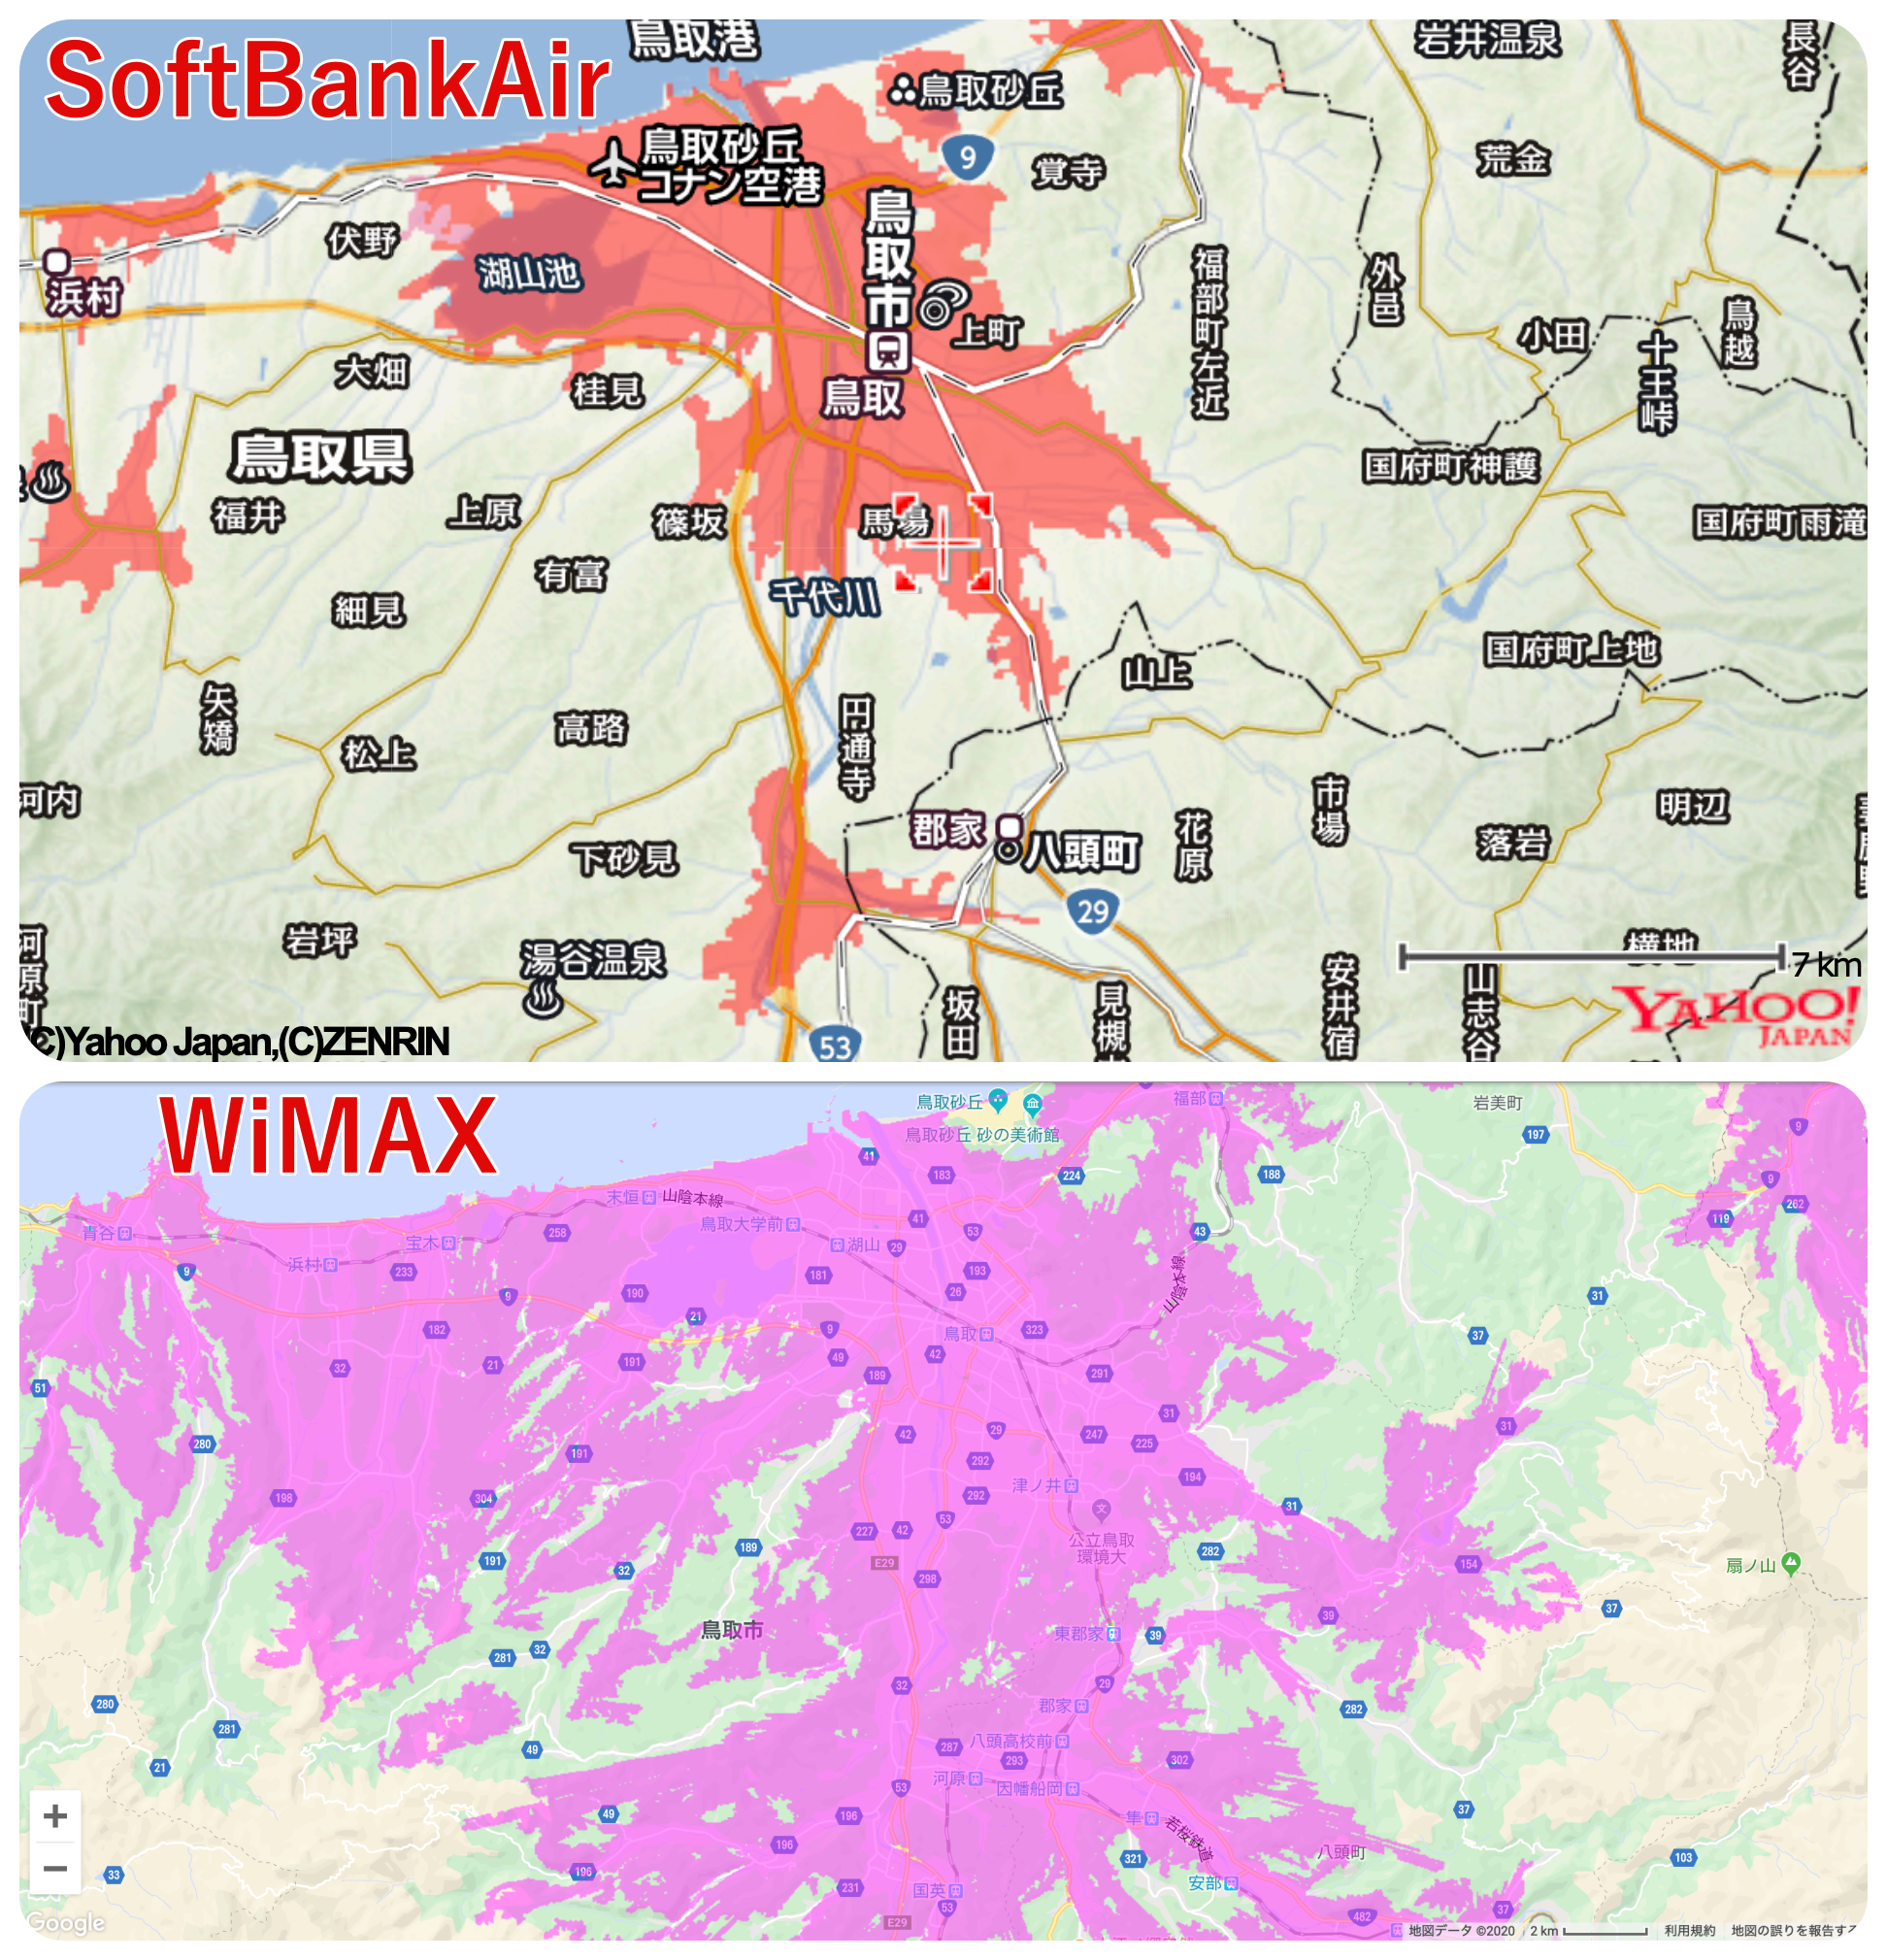 softbankair-wimax-area